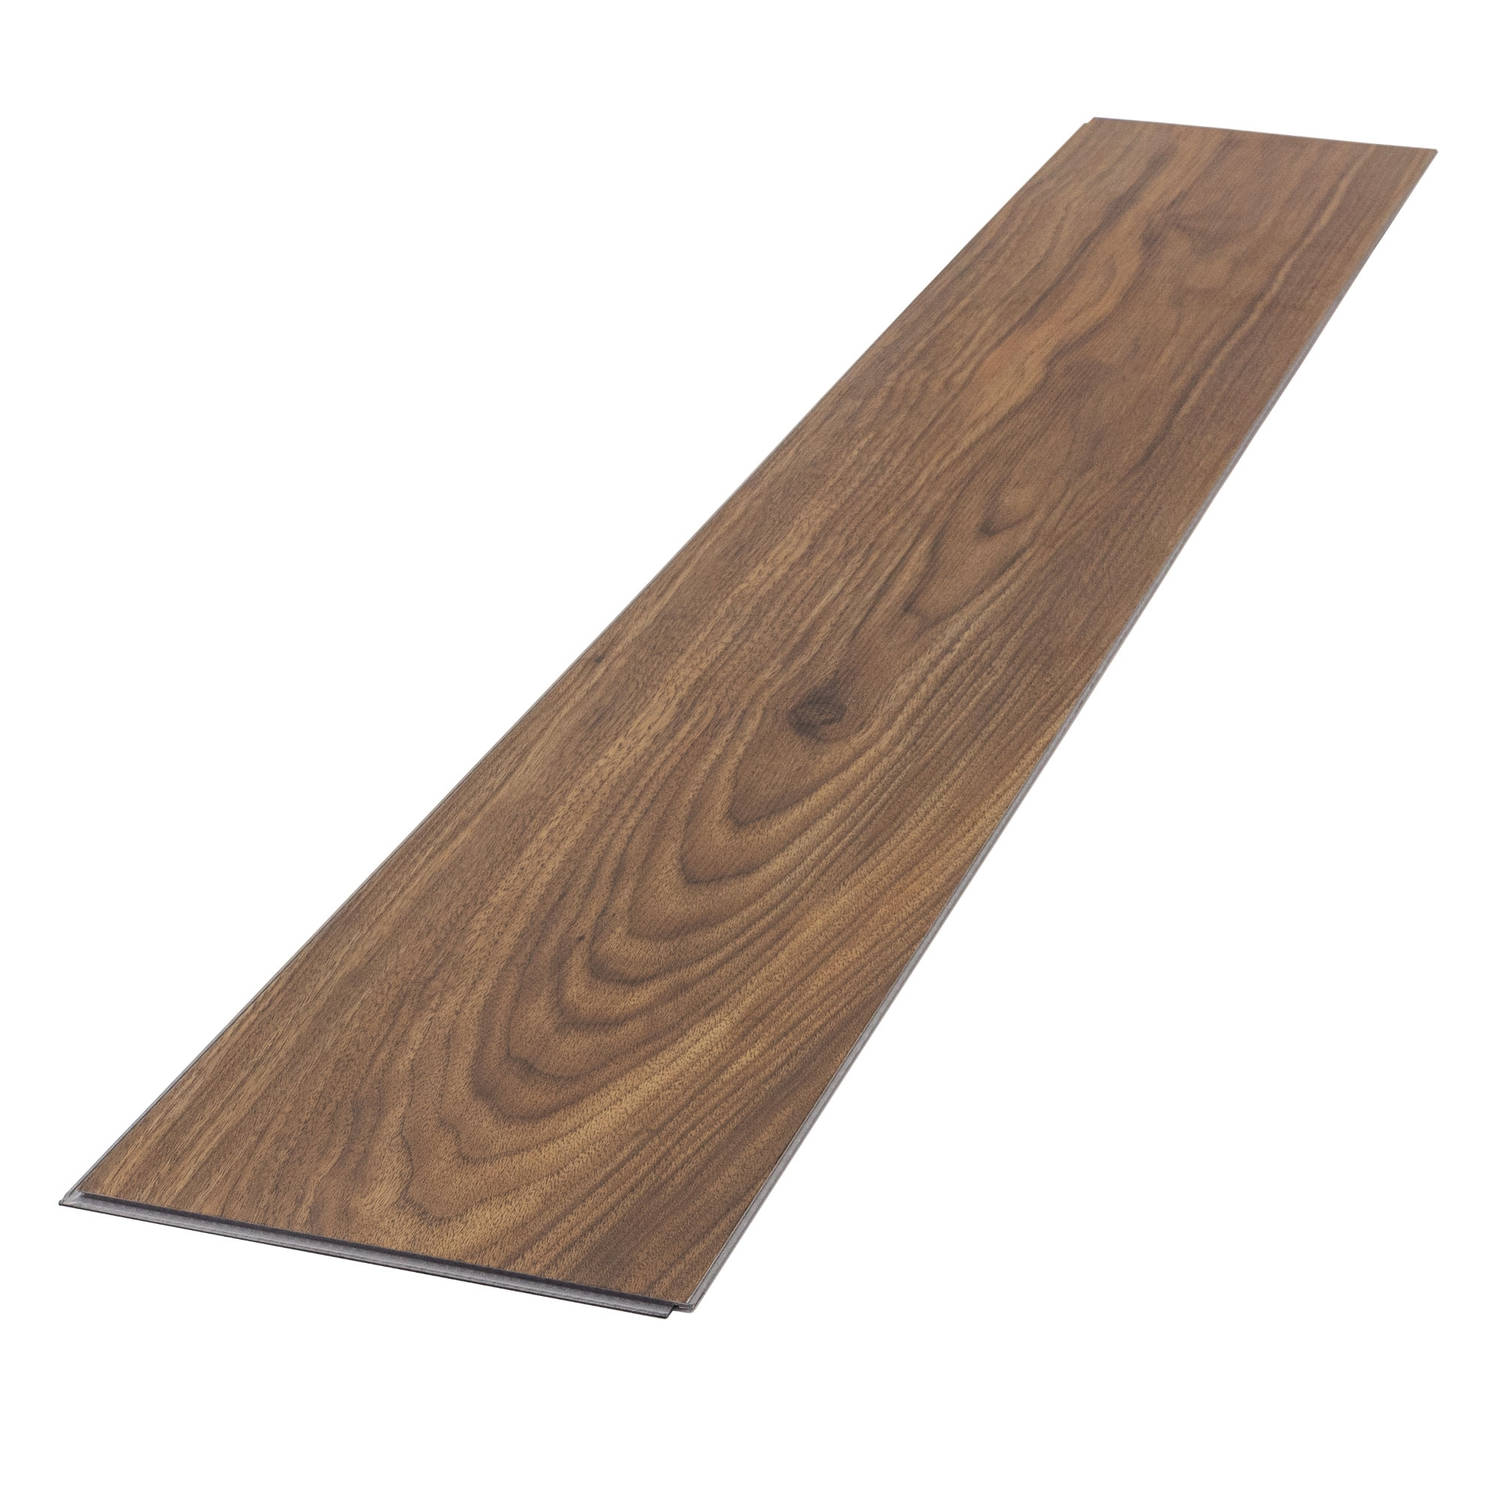 PVC vinyl vloer eiken uitloop met kliksysteem voor 1,5 m² 122x18 cm design vloerpatroon ML-Design